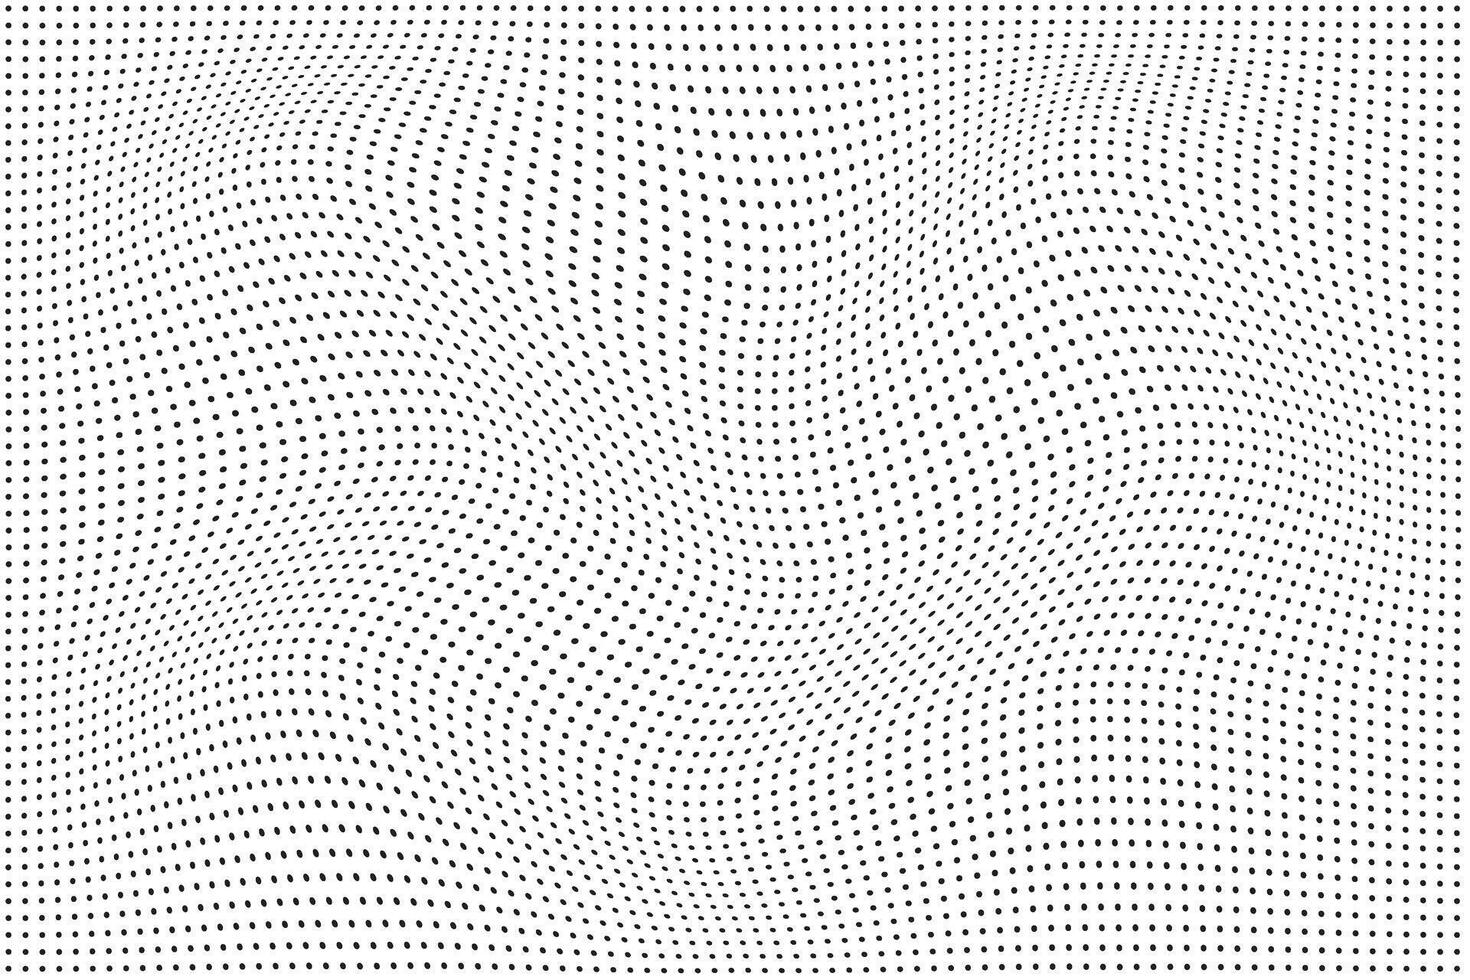 un blanco antecedentes con un lote de puntos en eso moderno sencillo resumen negro color pequeño polca punto ondulado modelo vector